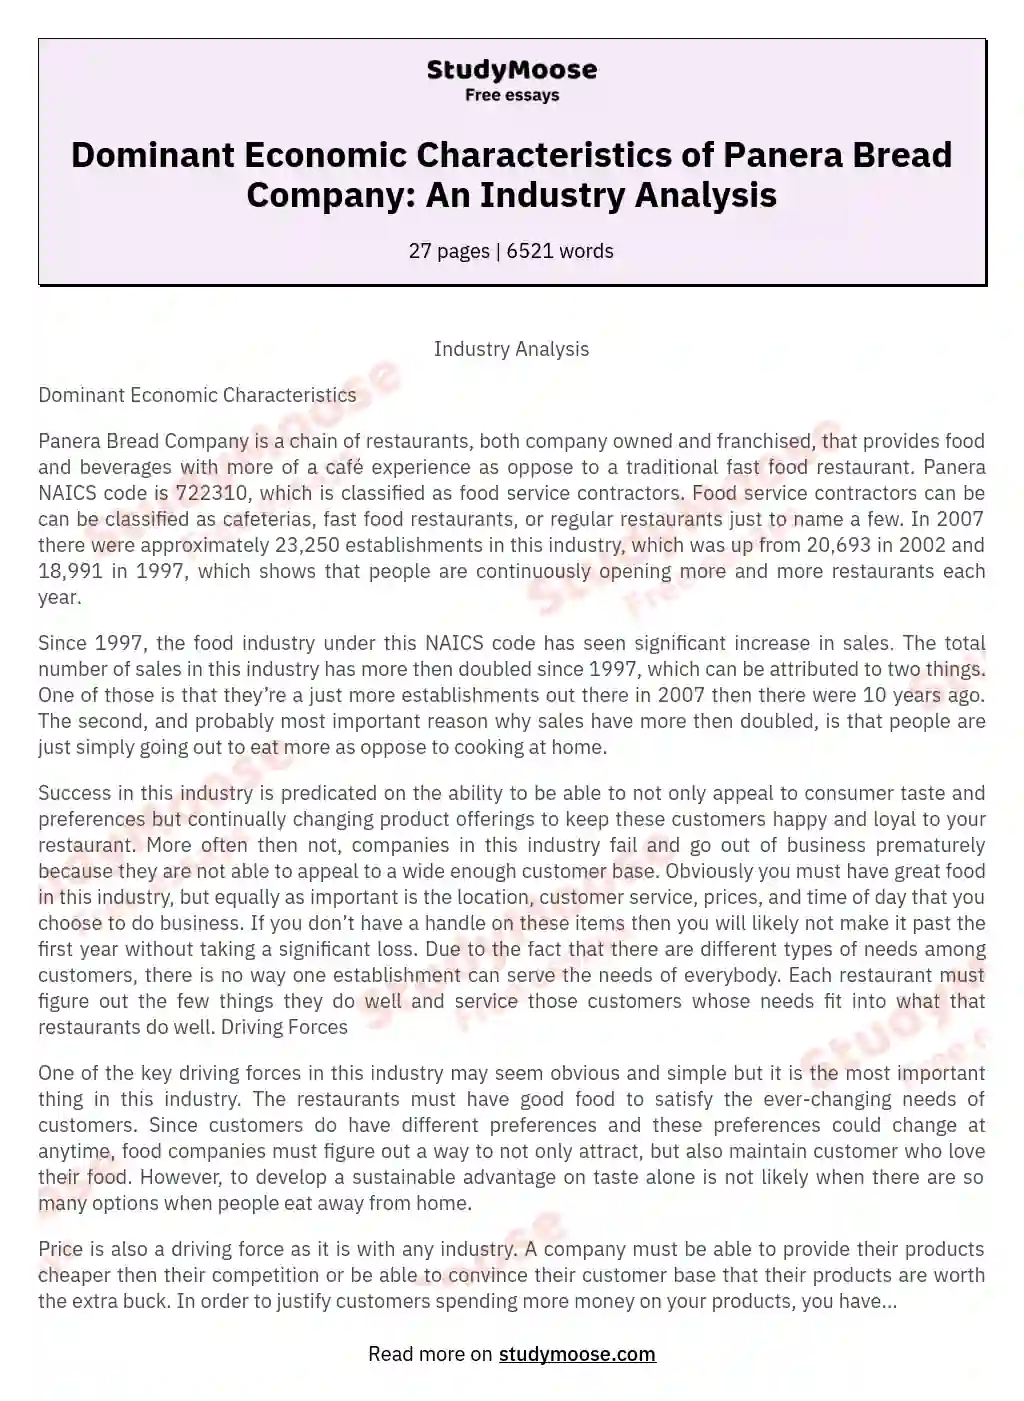 Dominant Economic Characteristics of Panera Bread Company: An Industry Analysis essay